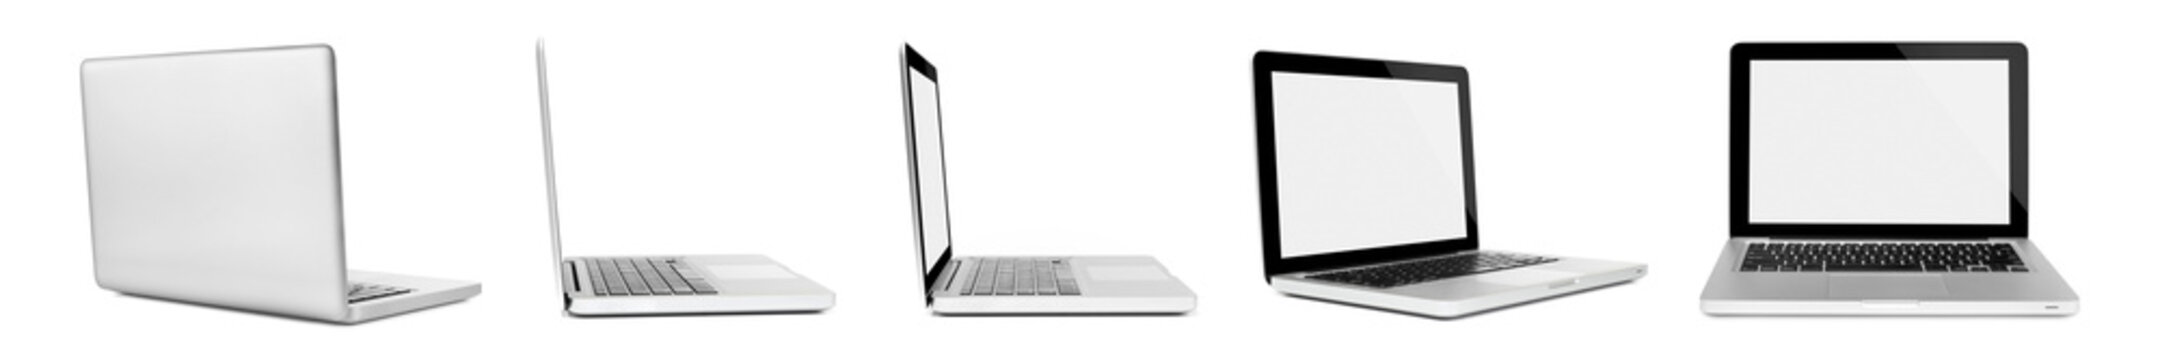 Laptops on white background